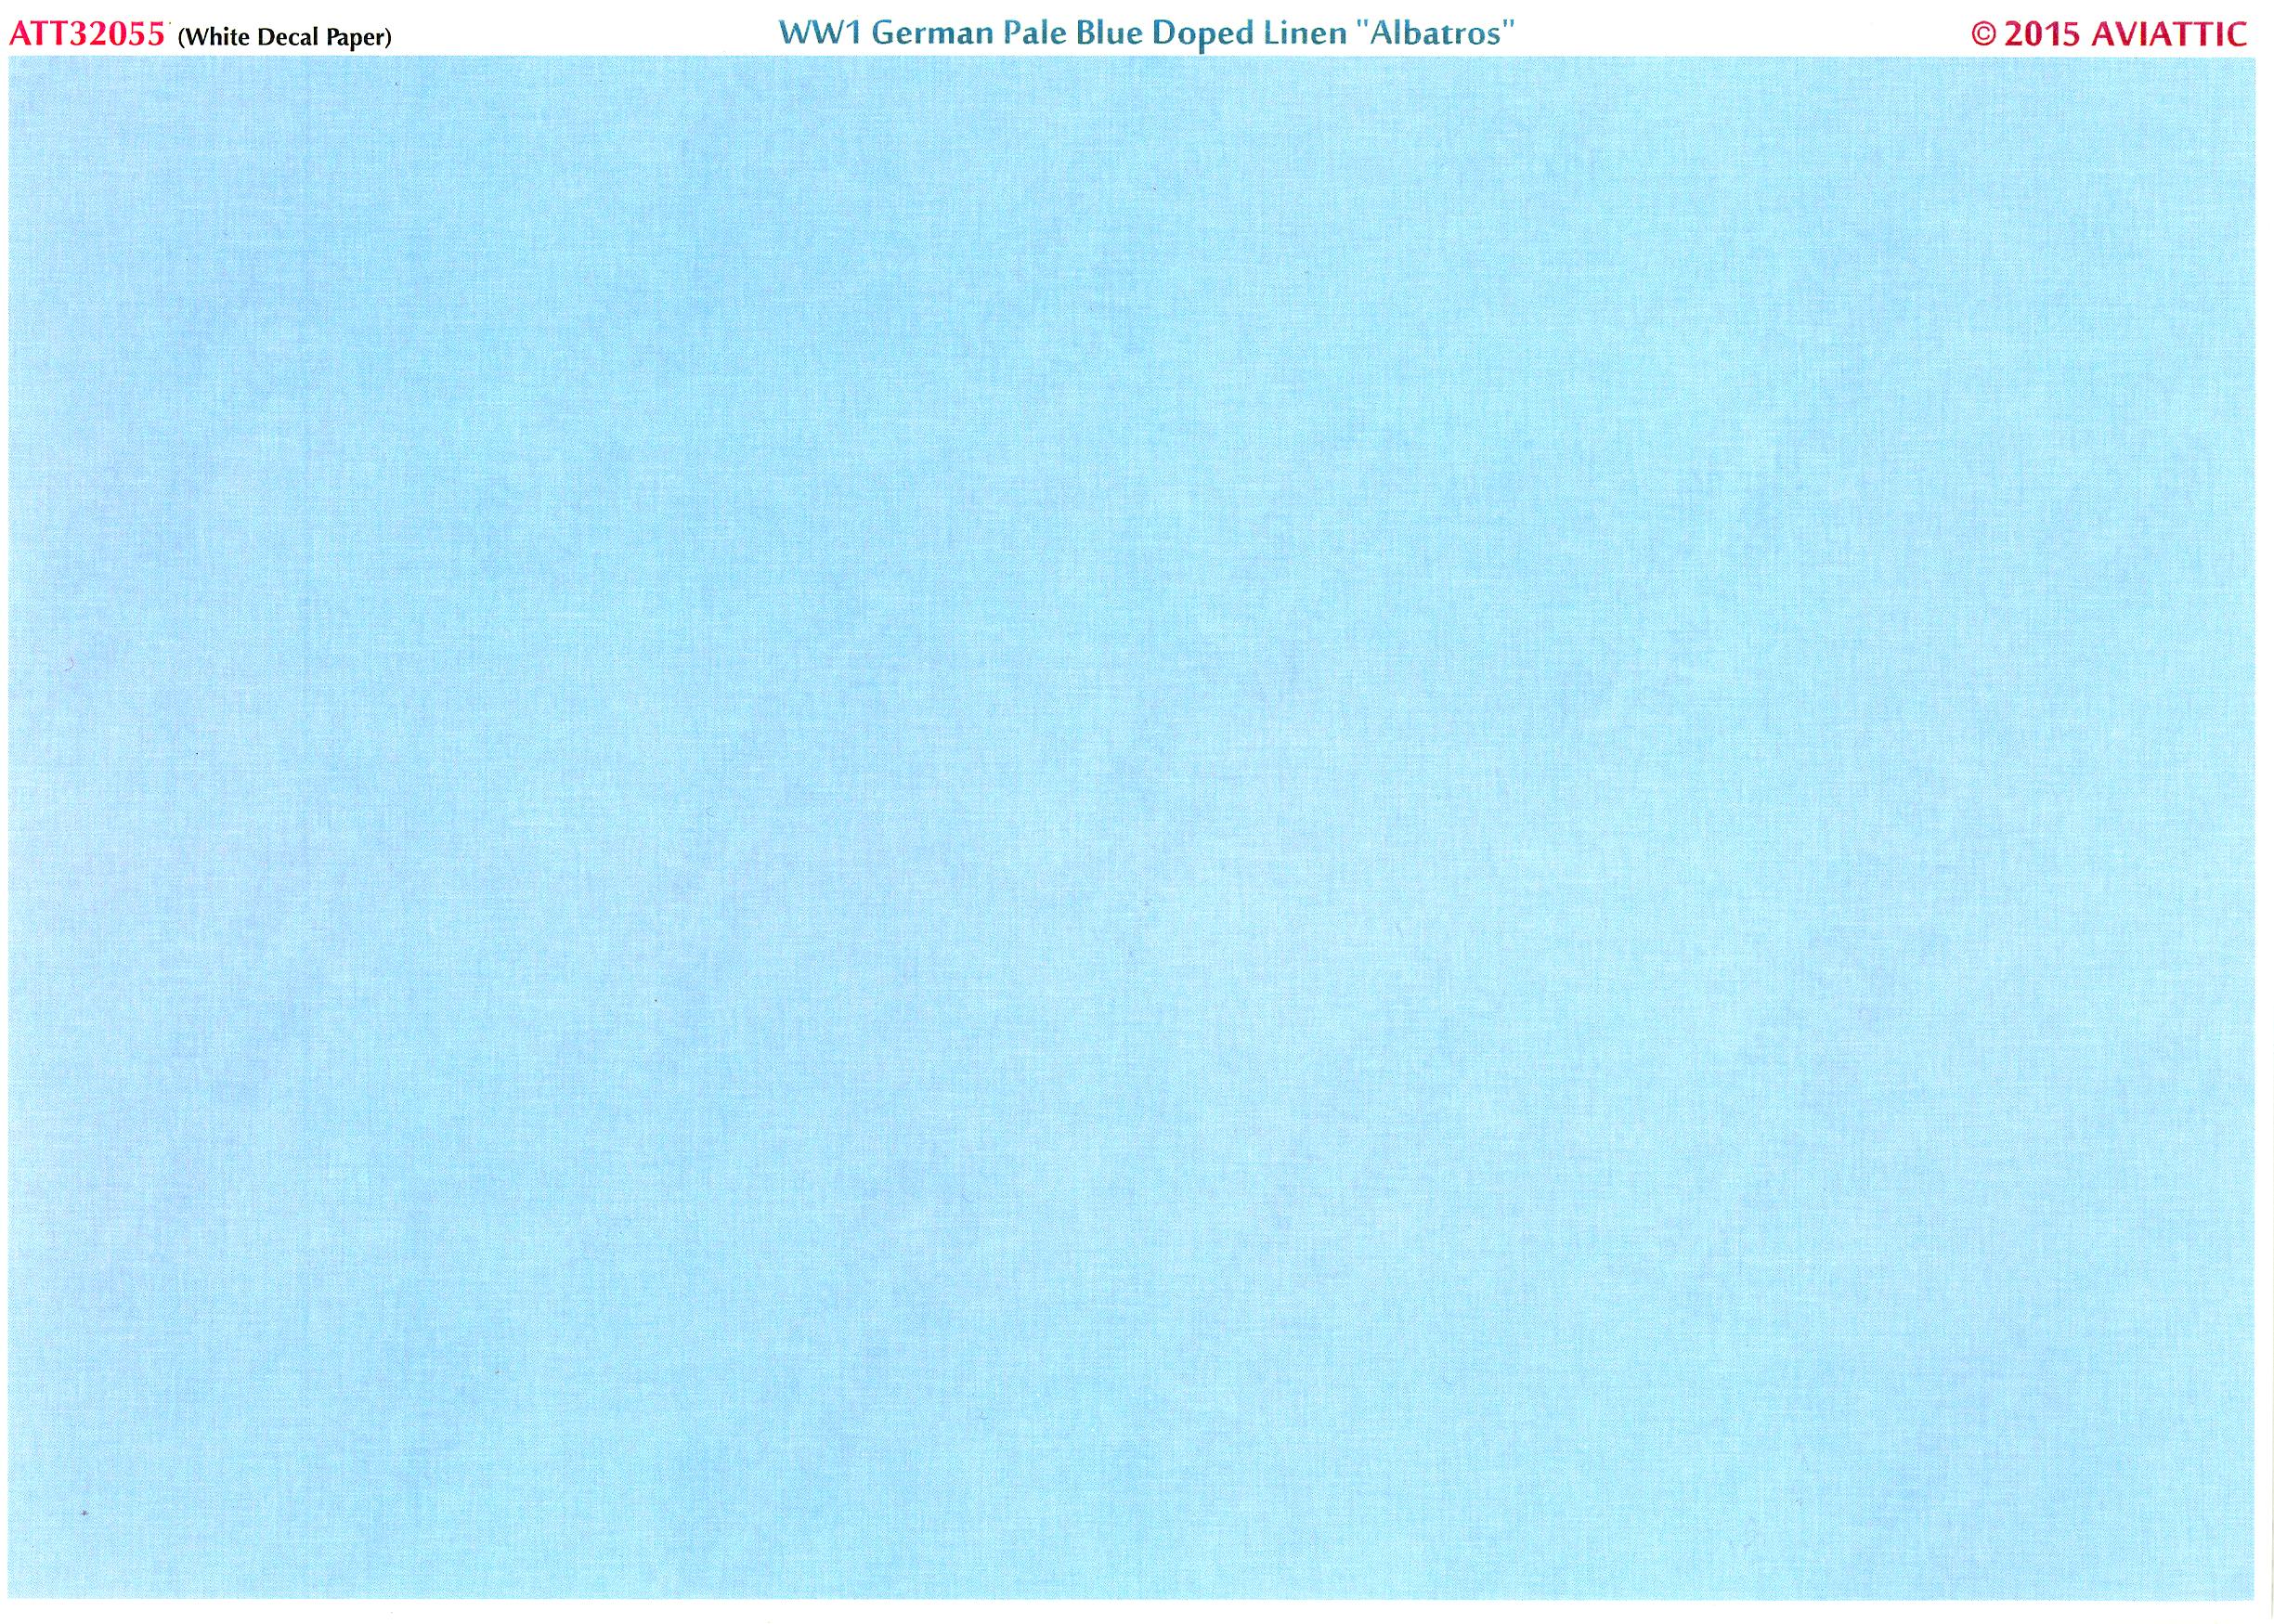 Aviattic Decals 1//32 PALE BLUE DOPED LINEN WWI Albatros Aircraft White Paper